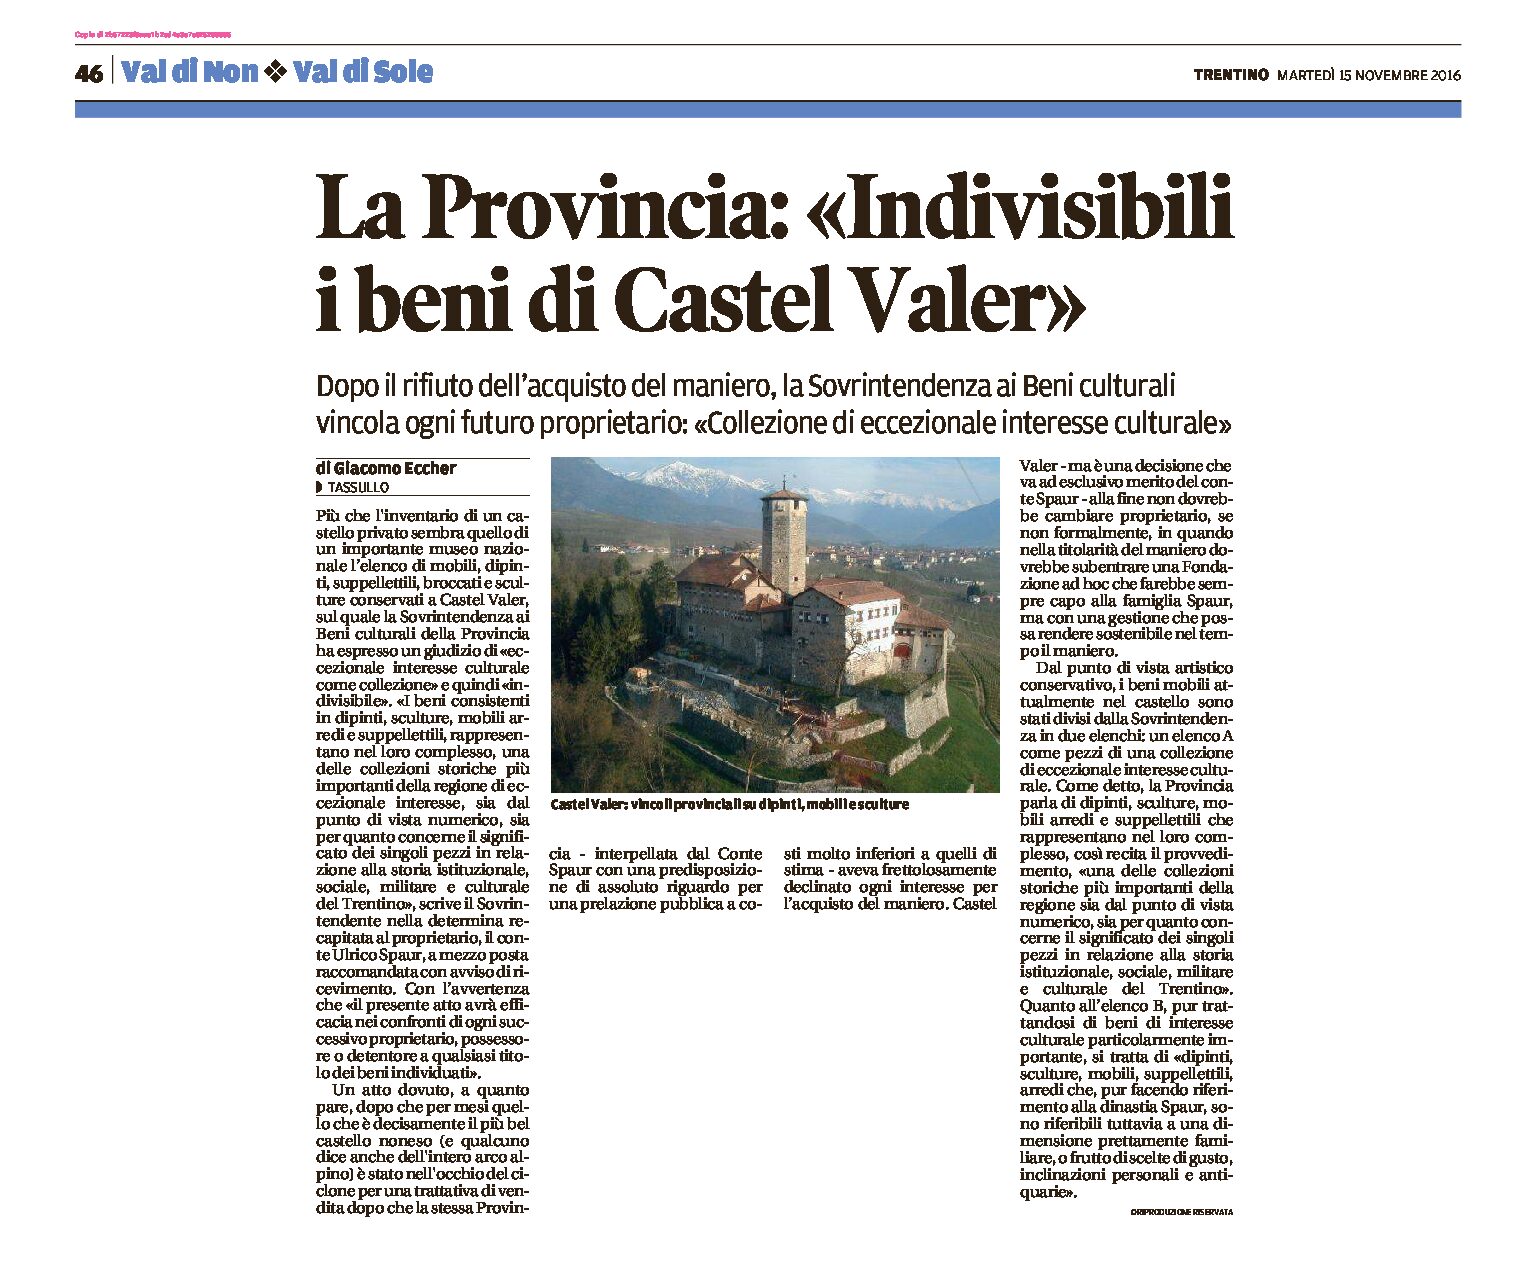 Castel Valer: per la Provincia “indivisibili i beni”